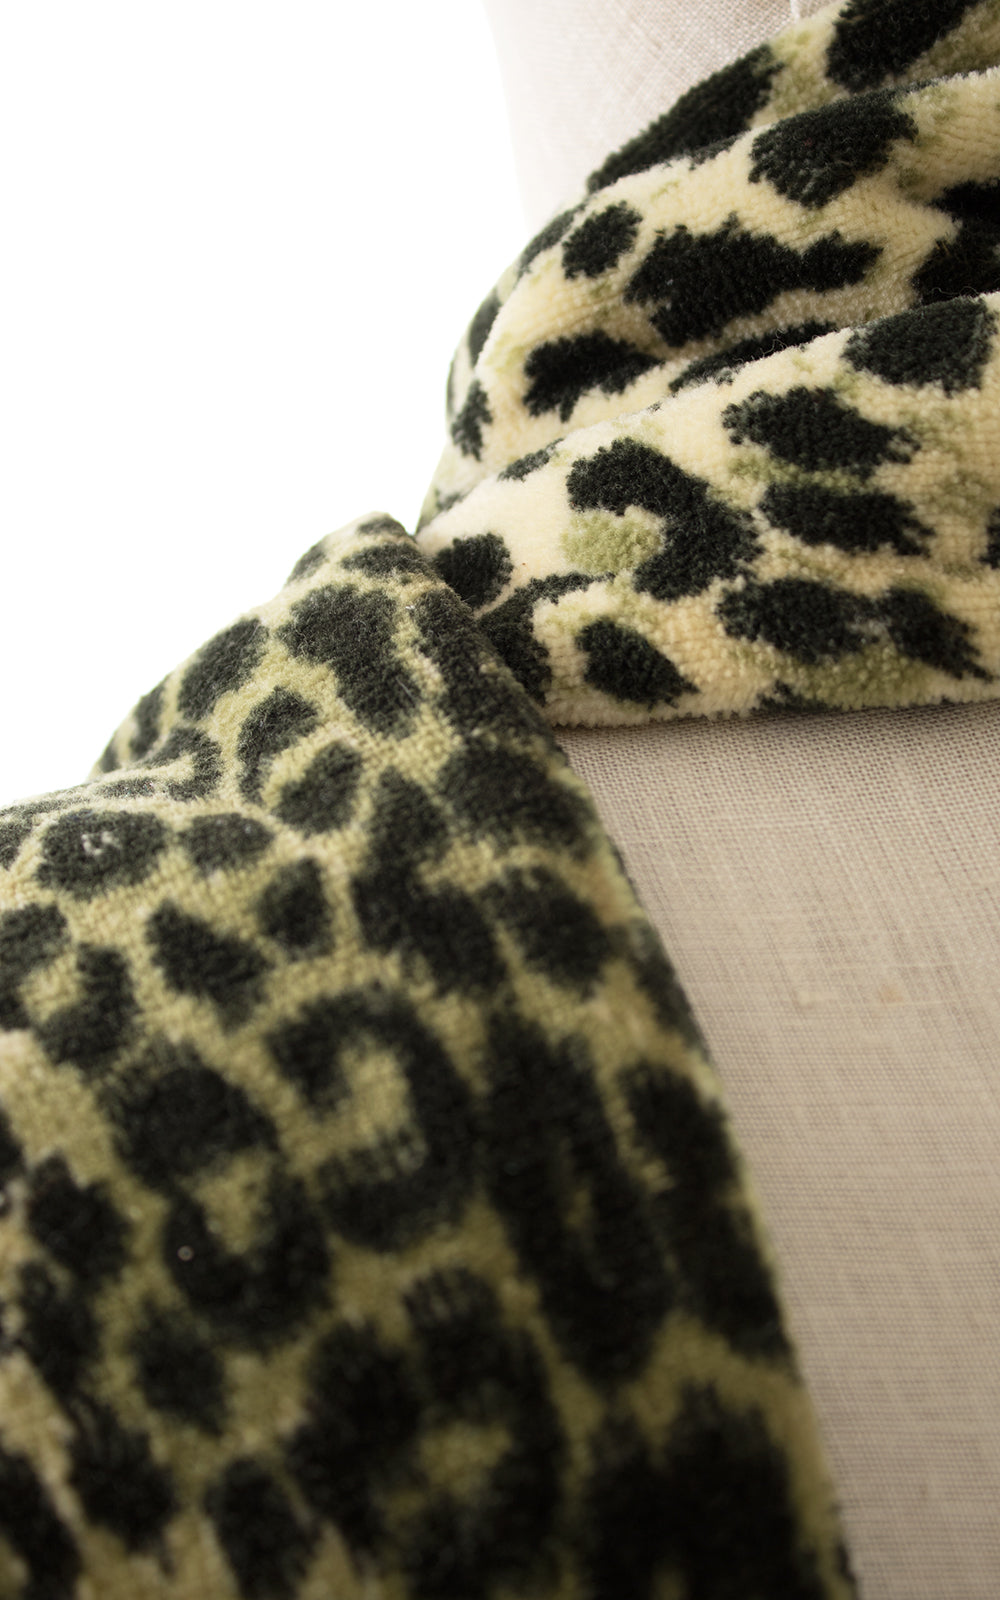 1960s Leopard Print Faux Fur Hat, Scarf & Handbag Set